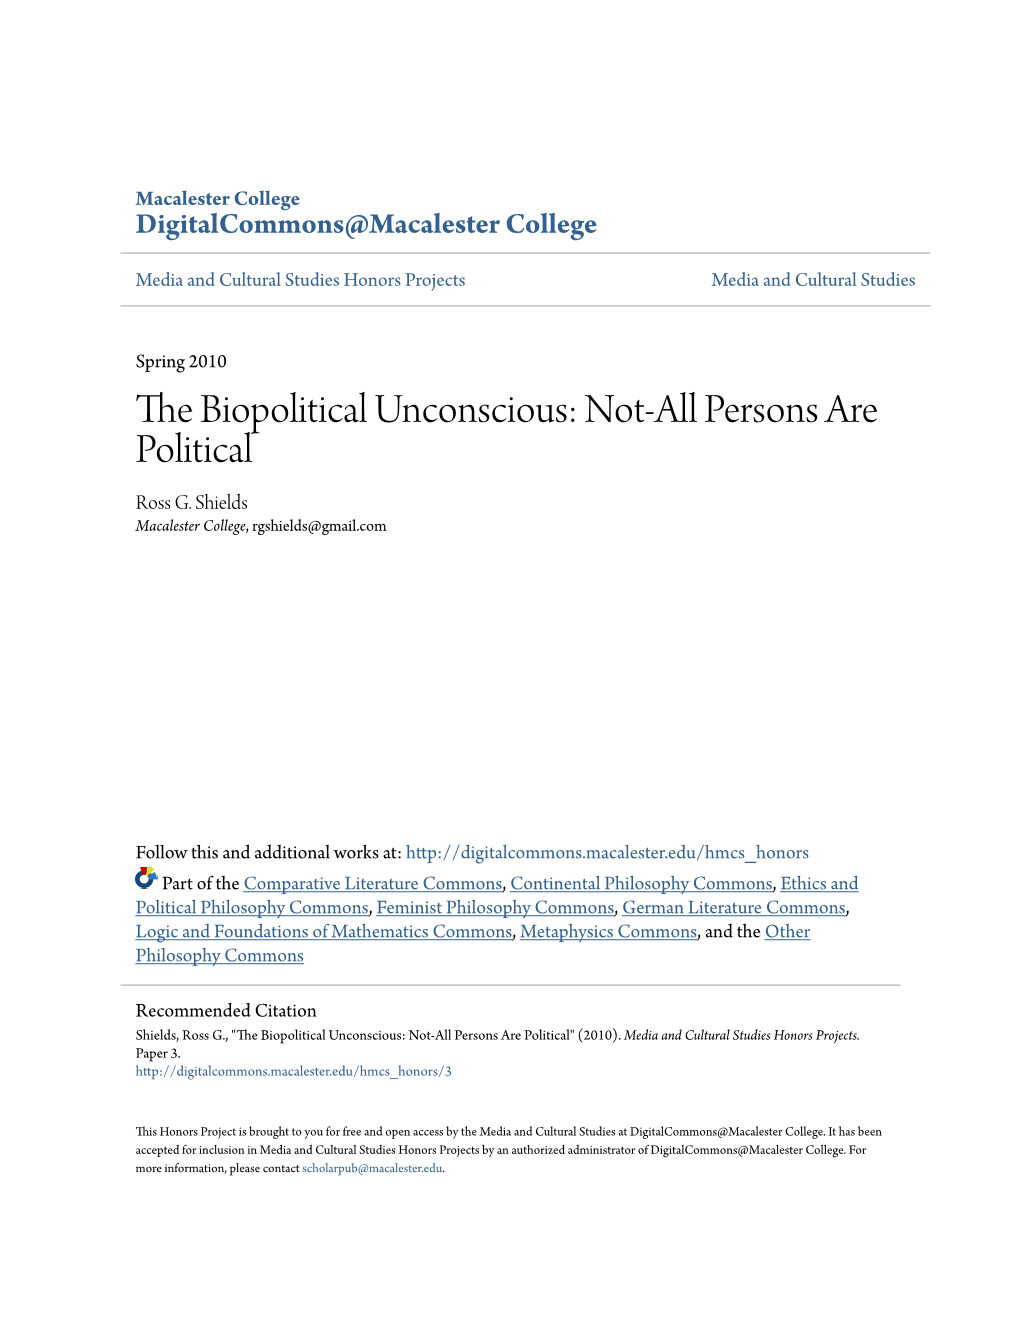 The Biopolitical Unconscious